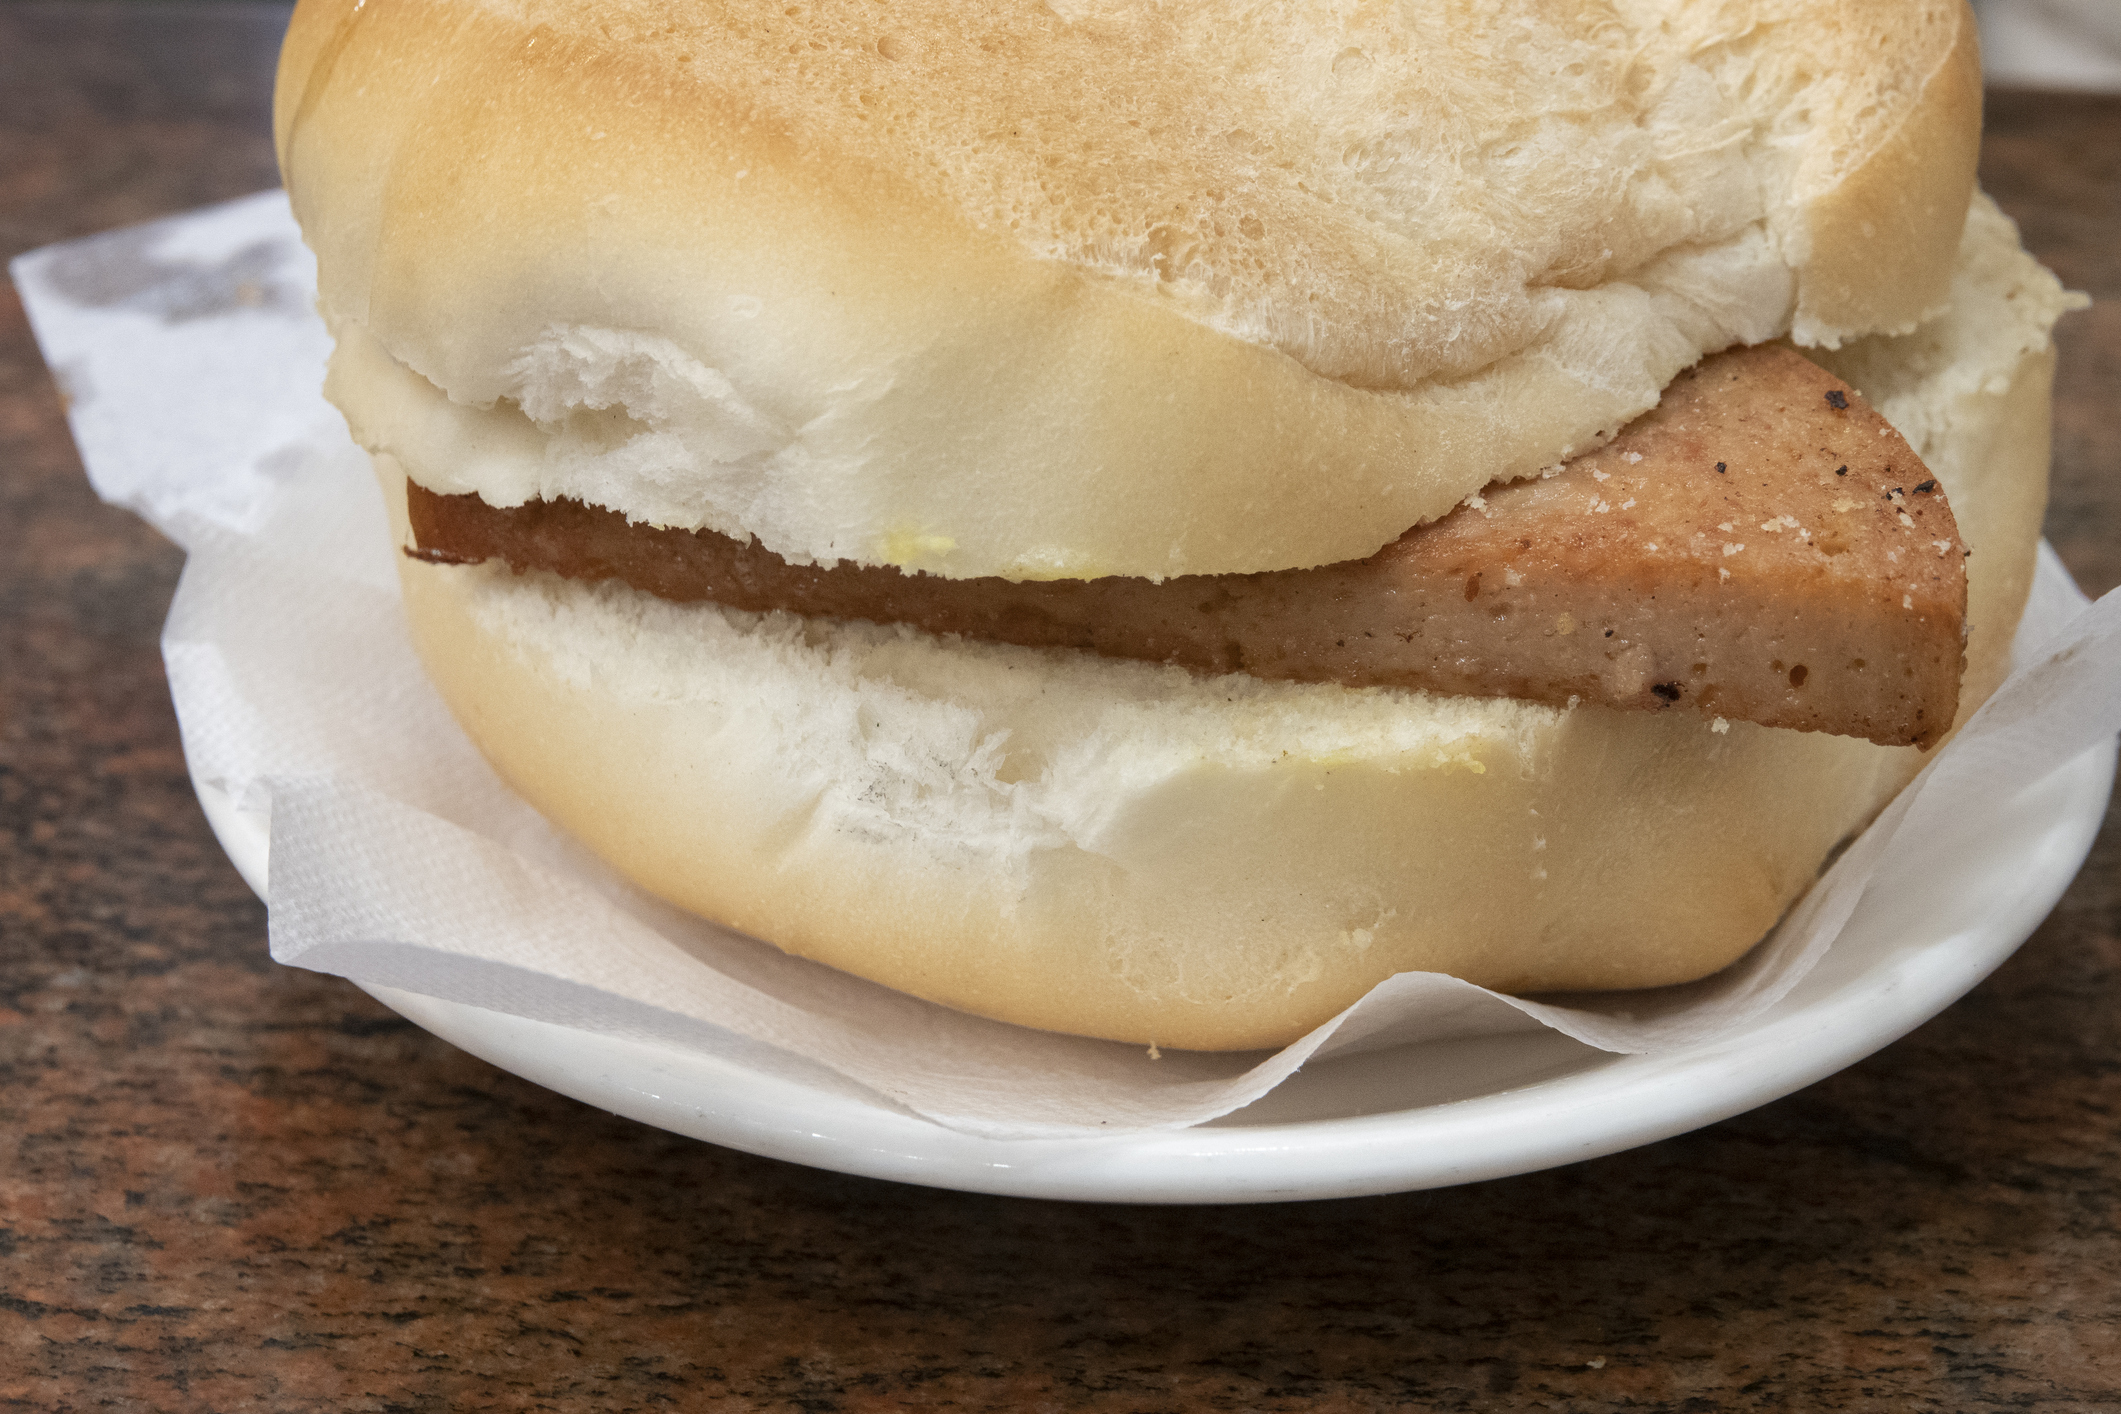 Sausage sandwich on a white plate